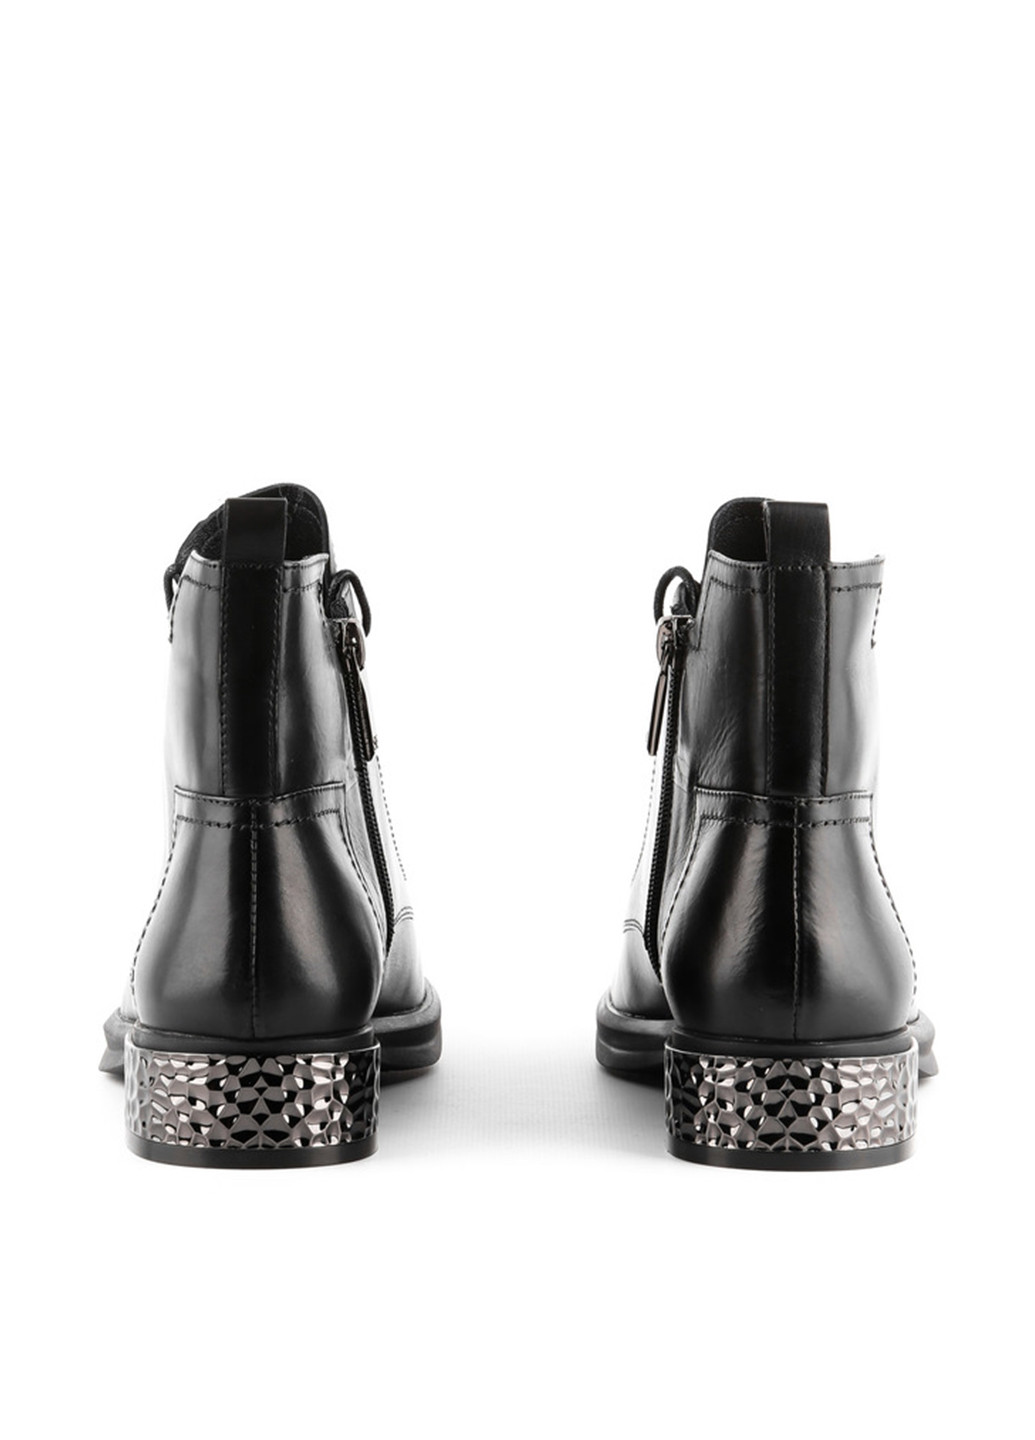 Осенние ботинки Sasha Fabiani с металлическими вставками, со шнуровкой